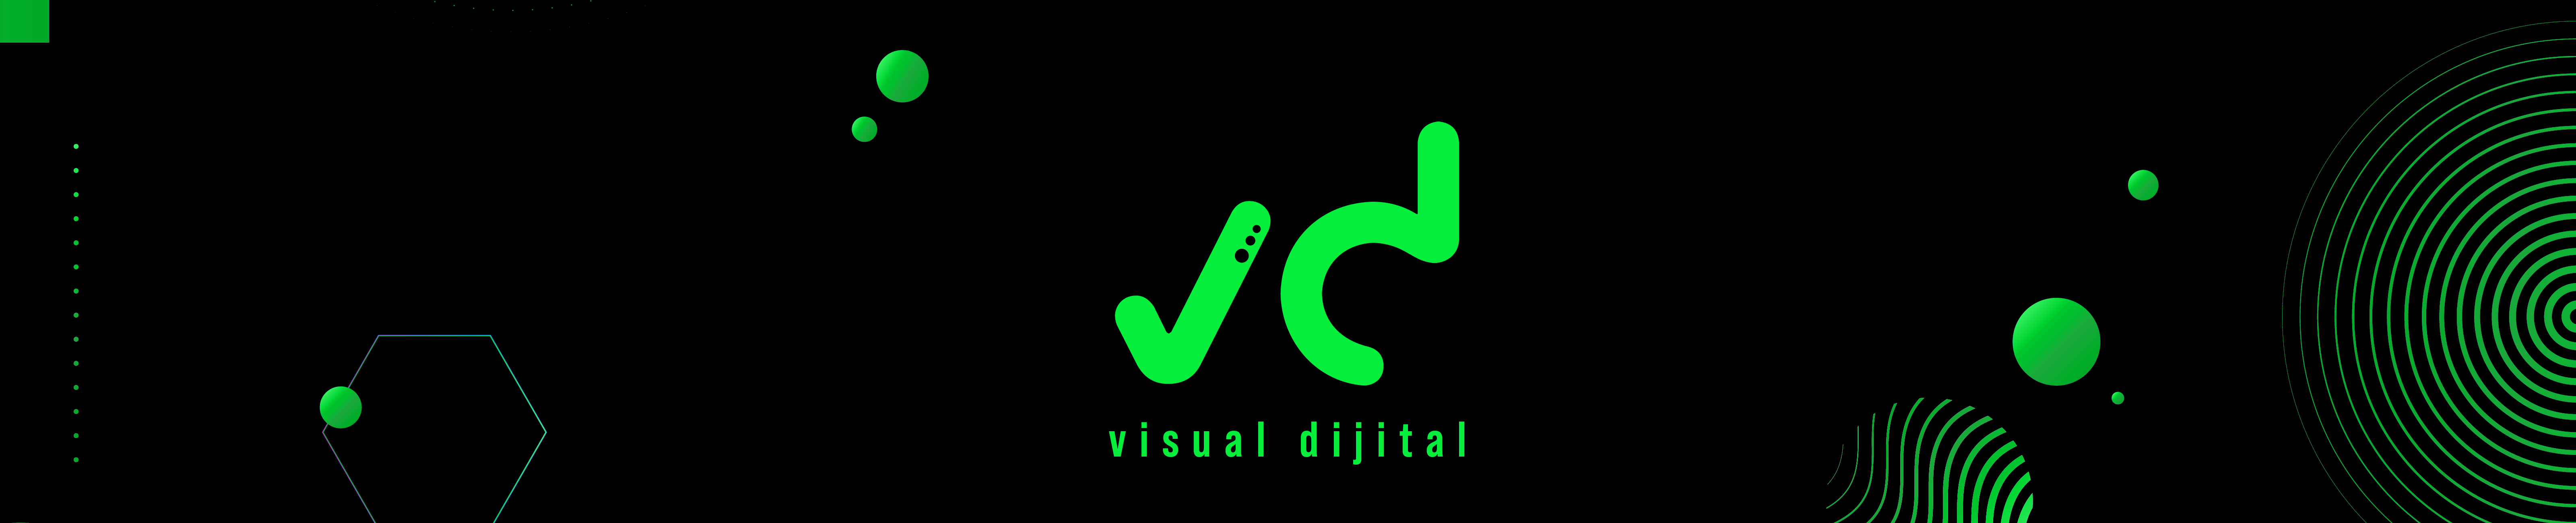 Visual Dijitals profilbanner